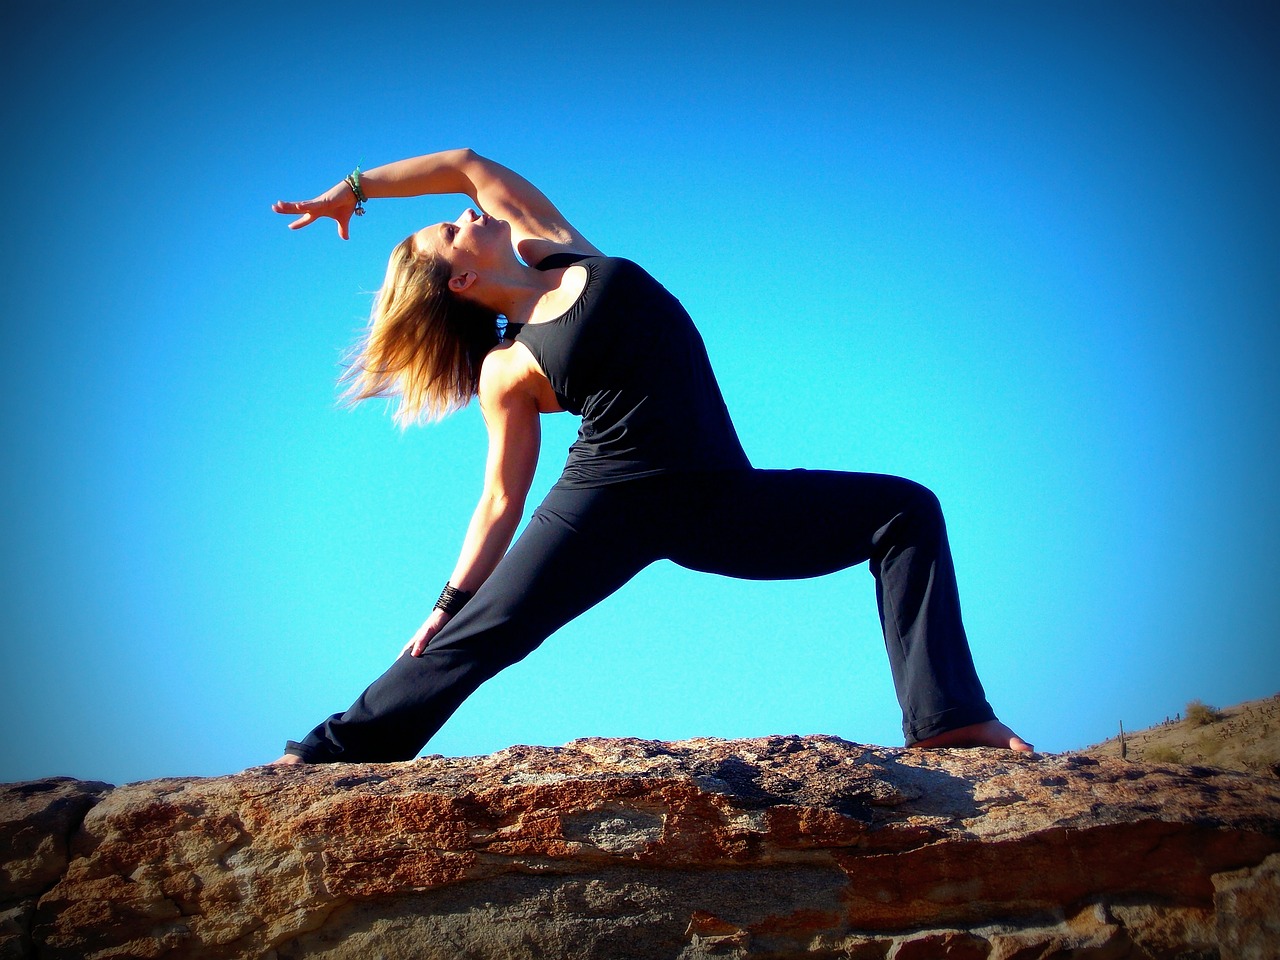 Warrior pose,yoga,rocks,blue sky,nature - free image from needpix.com